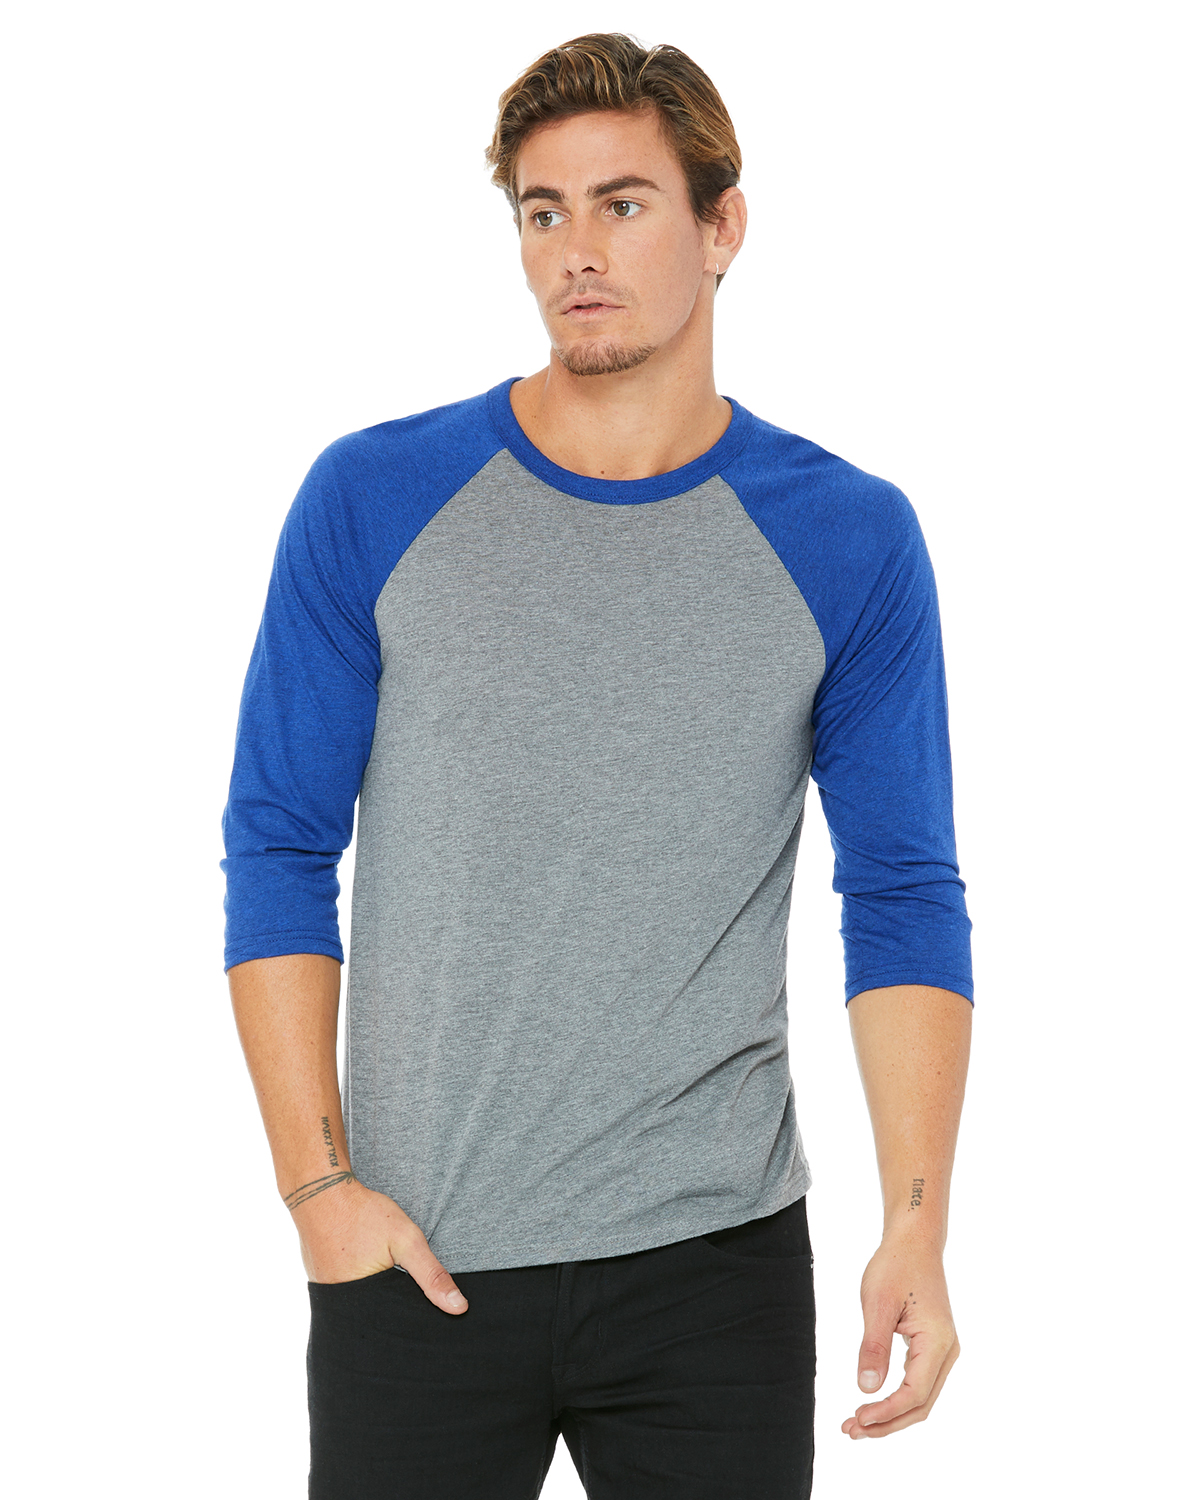 Champro Extra Innings 3/4 Sleeve Baseball Shirt; M; Grey Navy Sleeve; Adult Extra Innings 3/4 Sleeve Baseball T Shirt 